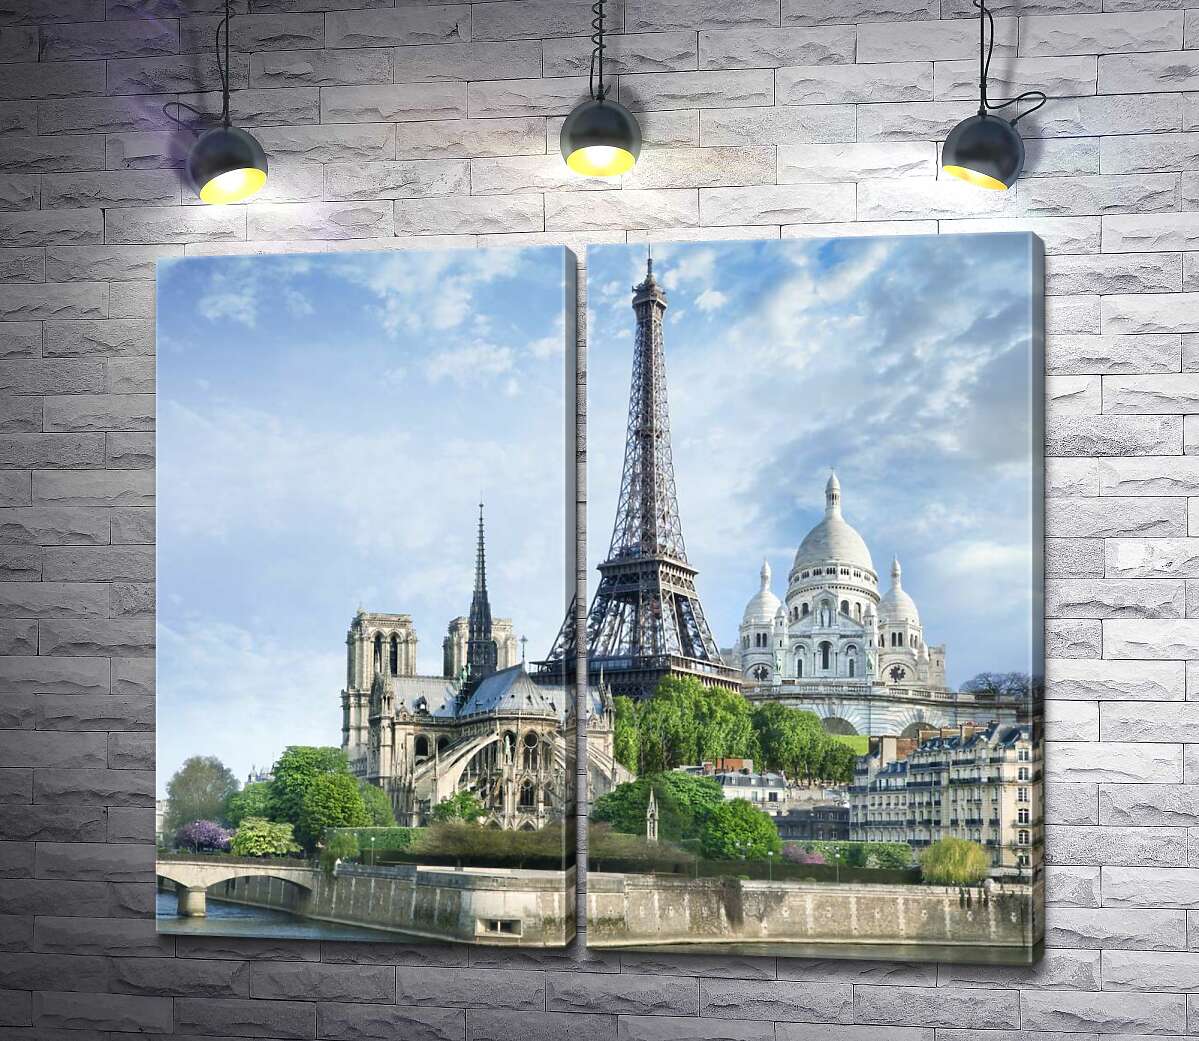 модульна картина Архітектурні твори Парижа: Ейфелева вежа (Eiffel tower), Нотр-Дам-де-Парі (Notre Dame de Paris), базиліка Сакре-Кер (Basilique du Sacre Cœur)